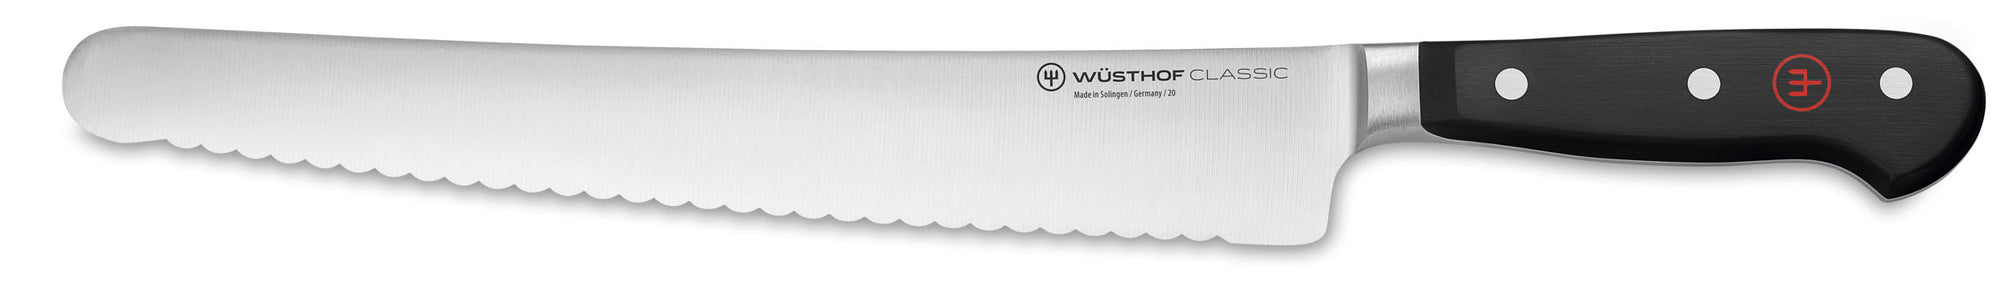 Wusthof Classic Super Slicer, Wavy Edge (serrated), 10-inch (26 cm) - 4532 Canada